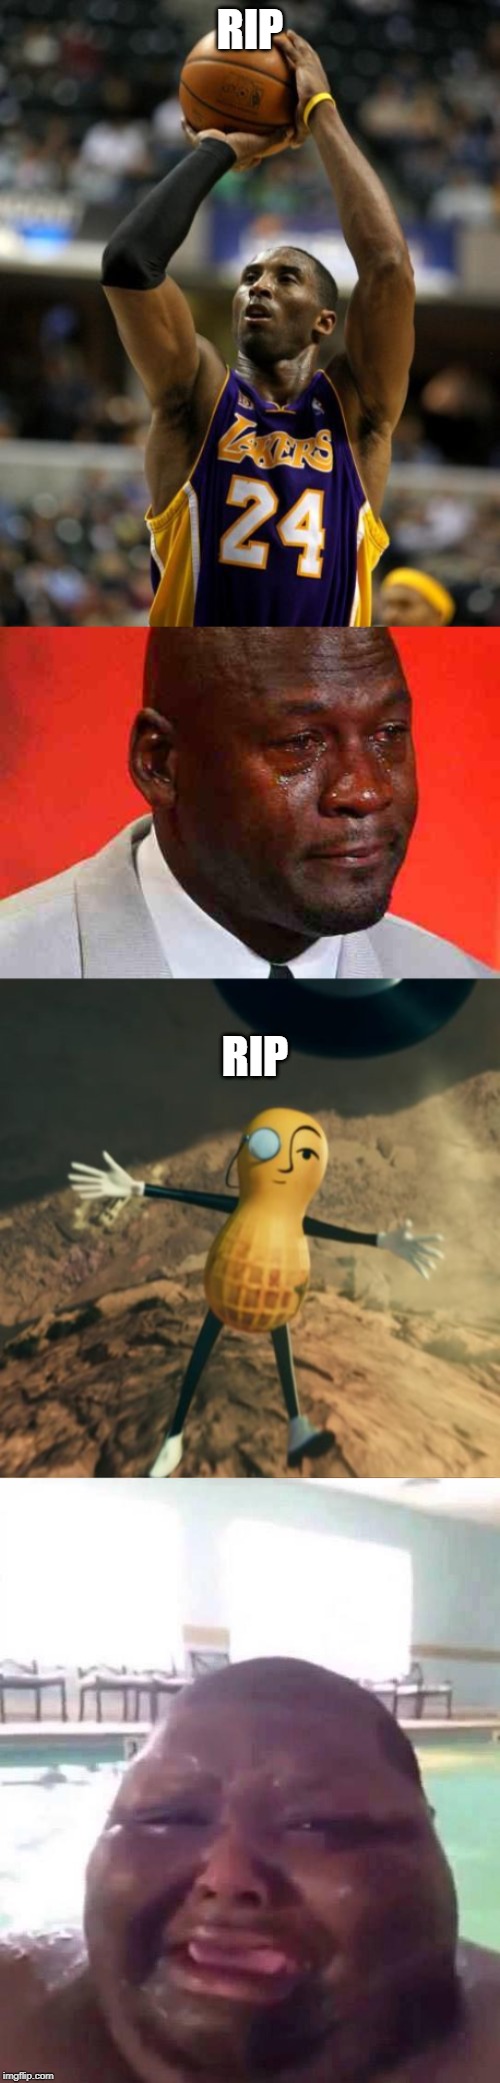  RIP; RIP | image tagged in memes,kobe,crying michael jordan,fat man crys,mr peanut's death | made w/ Imgflip meme maker